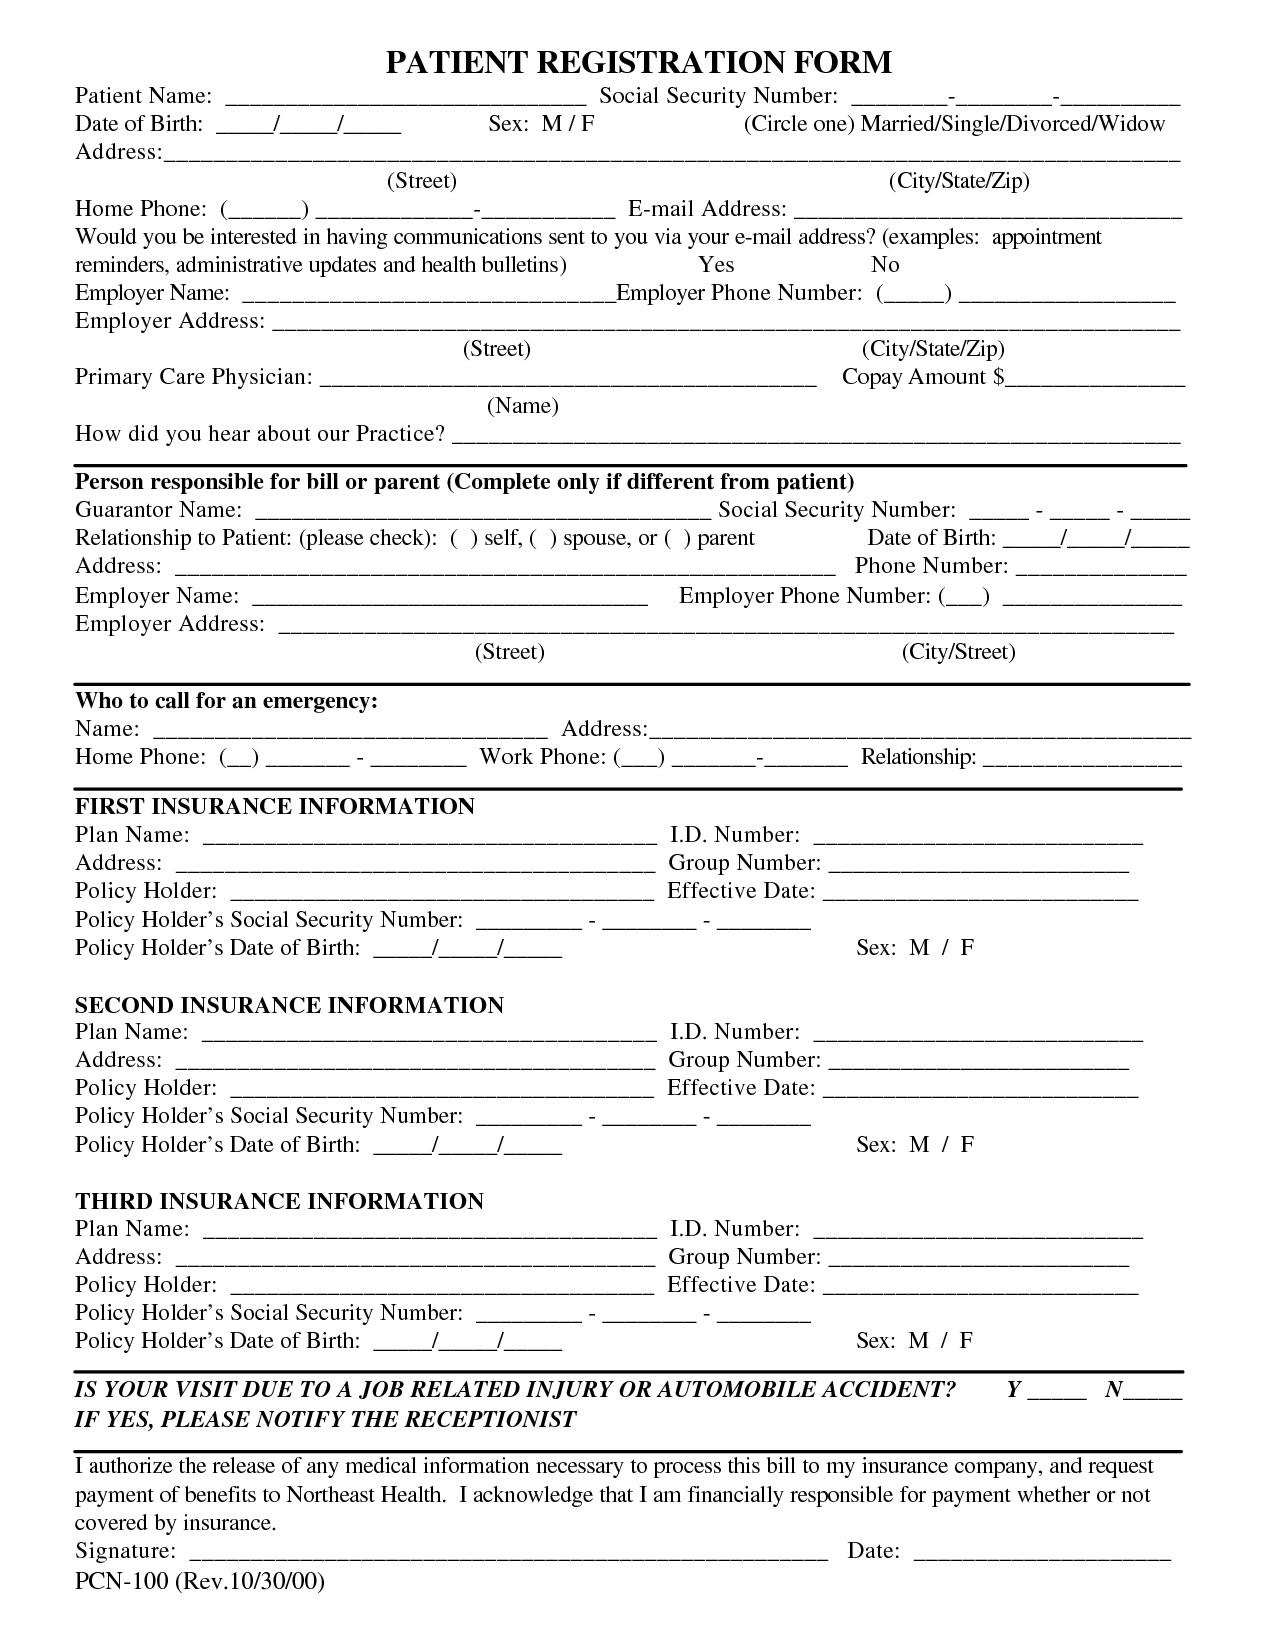 Patient Information form Template Free Patient Registration form Template